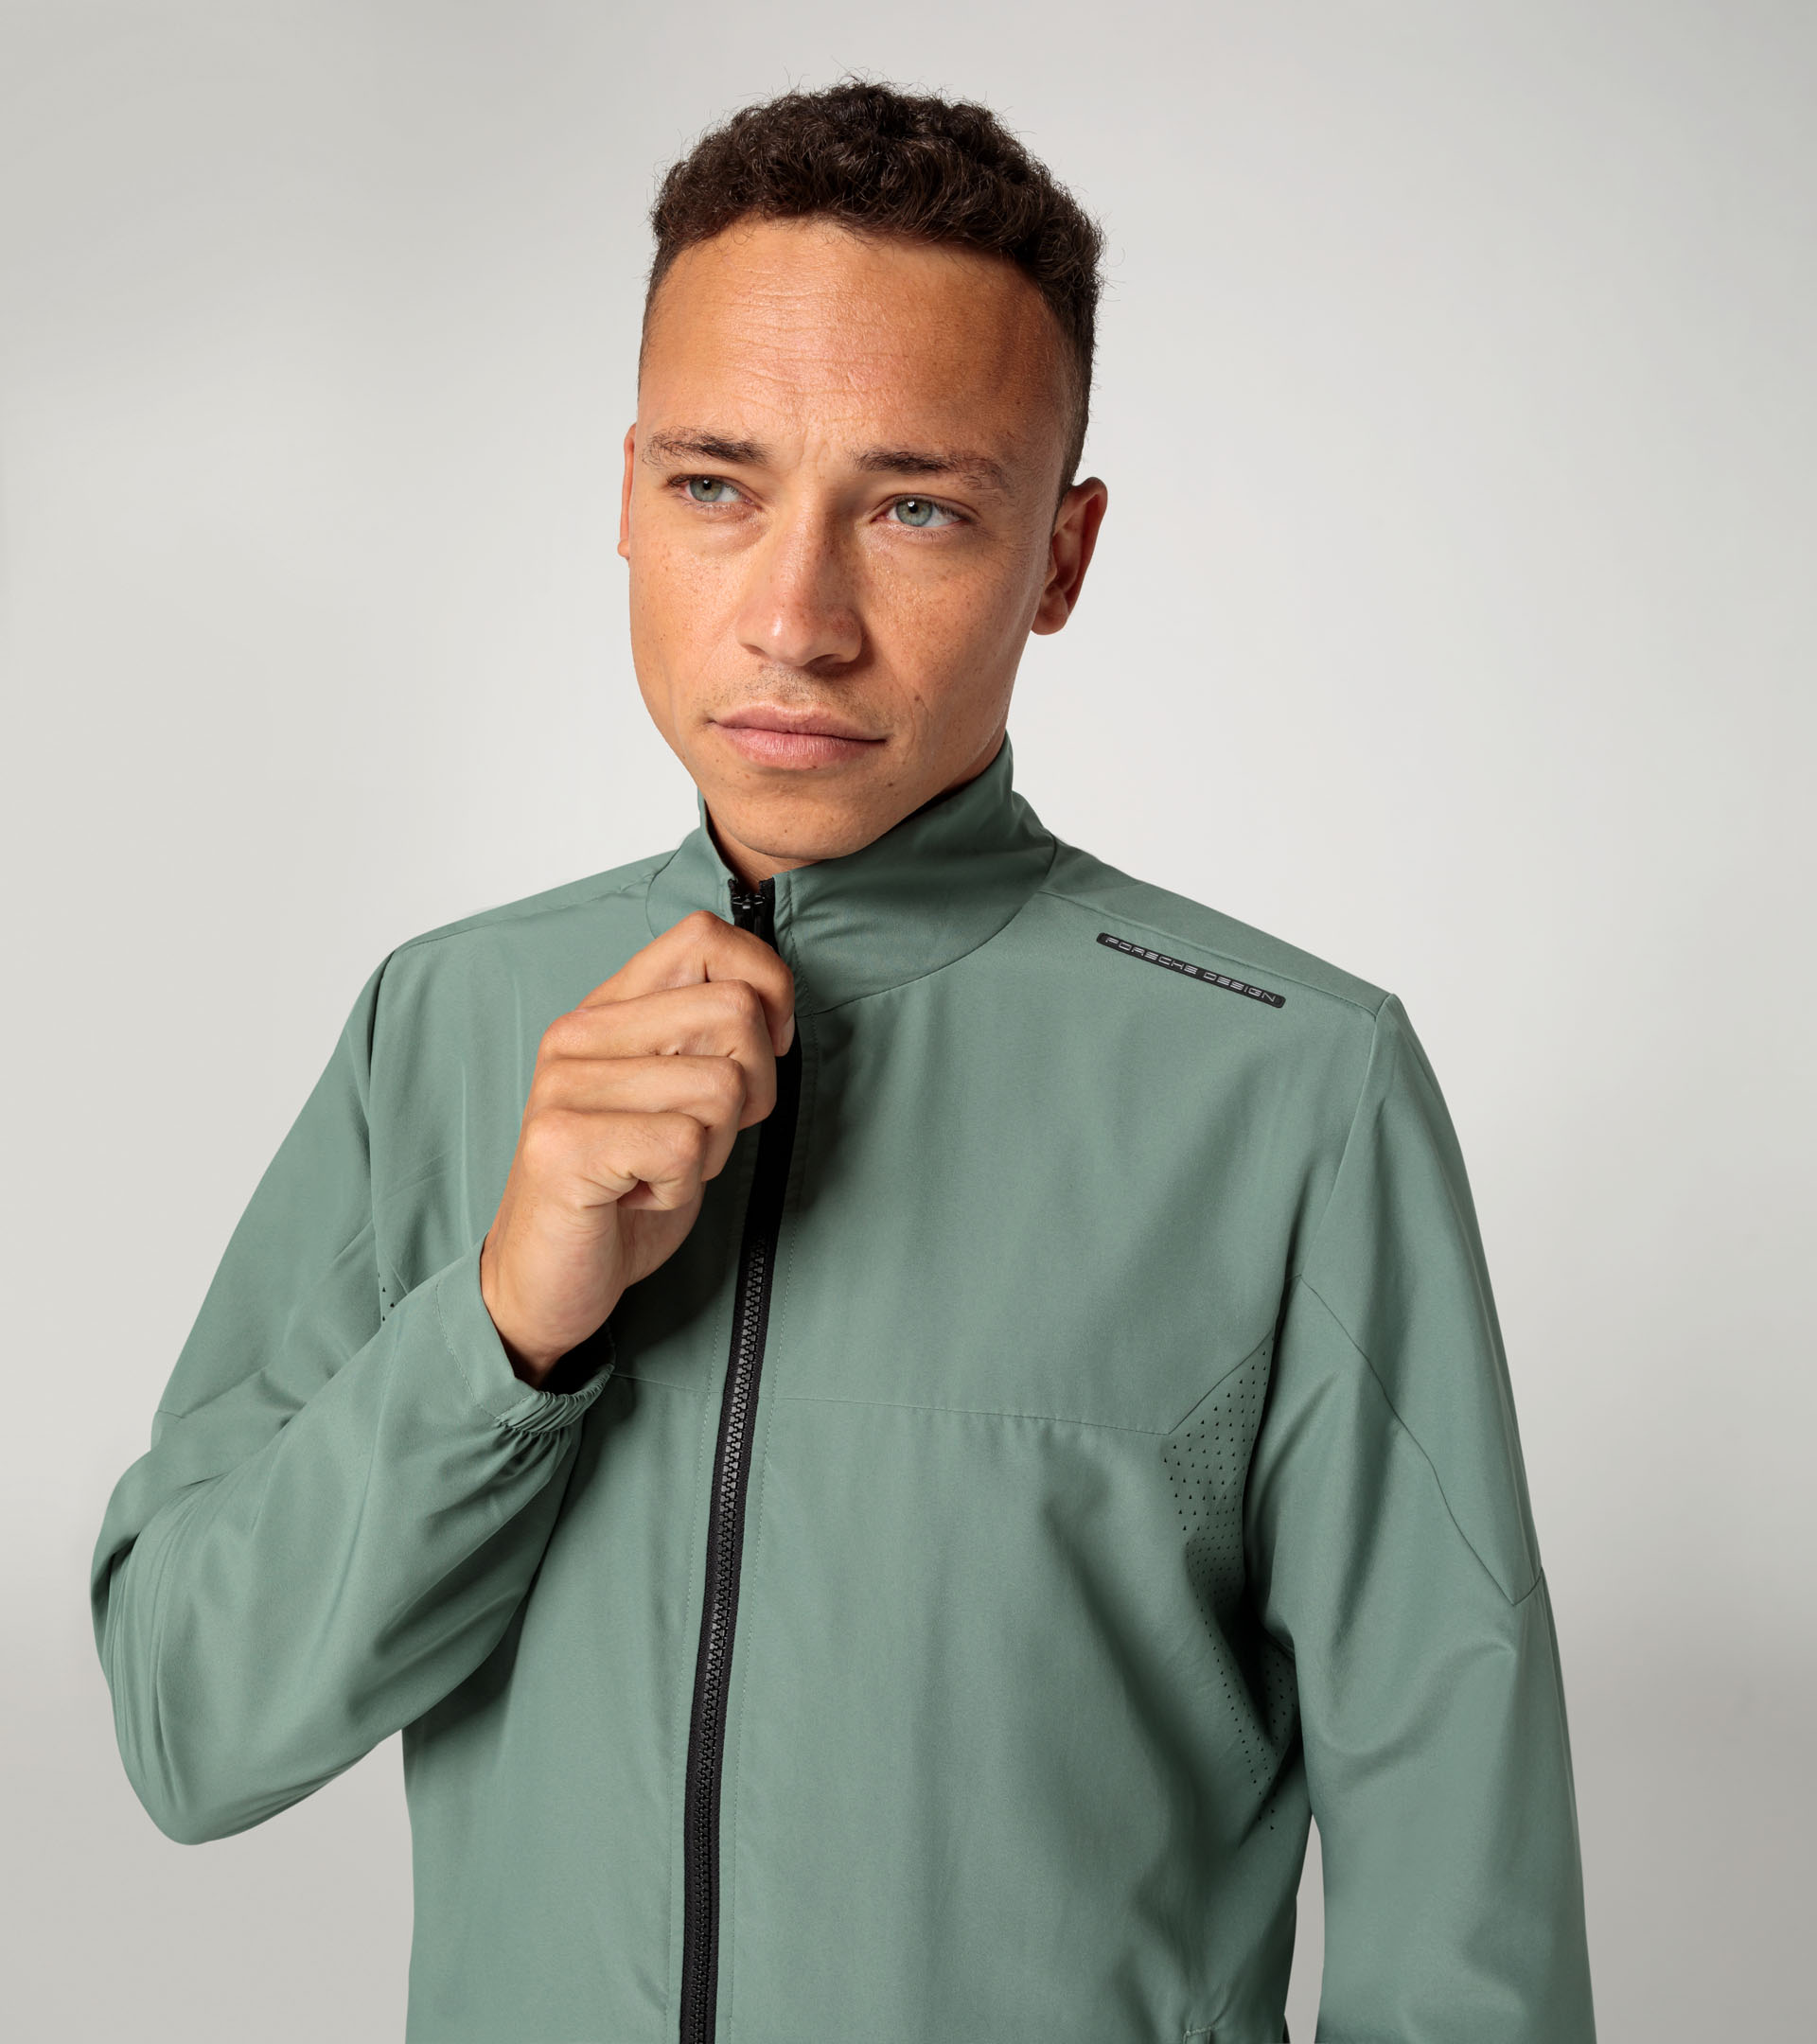 Woven tech jacket - Luxury Functional Jackets for Men | Porsche 